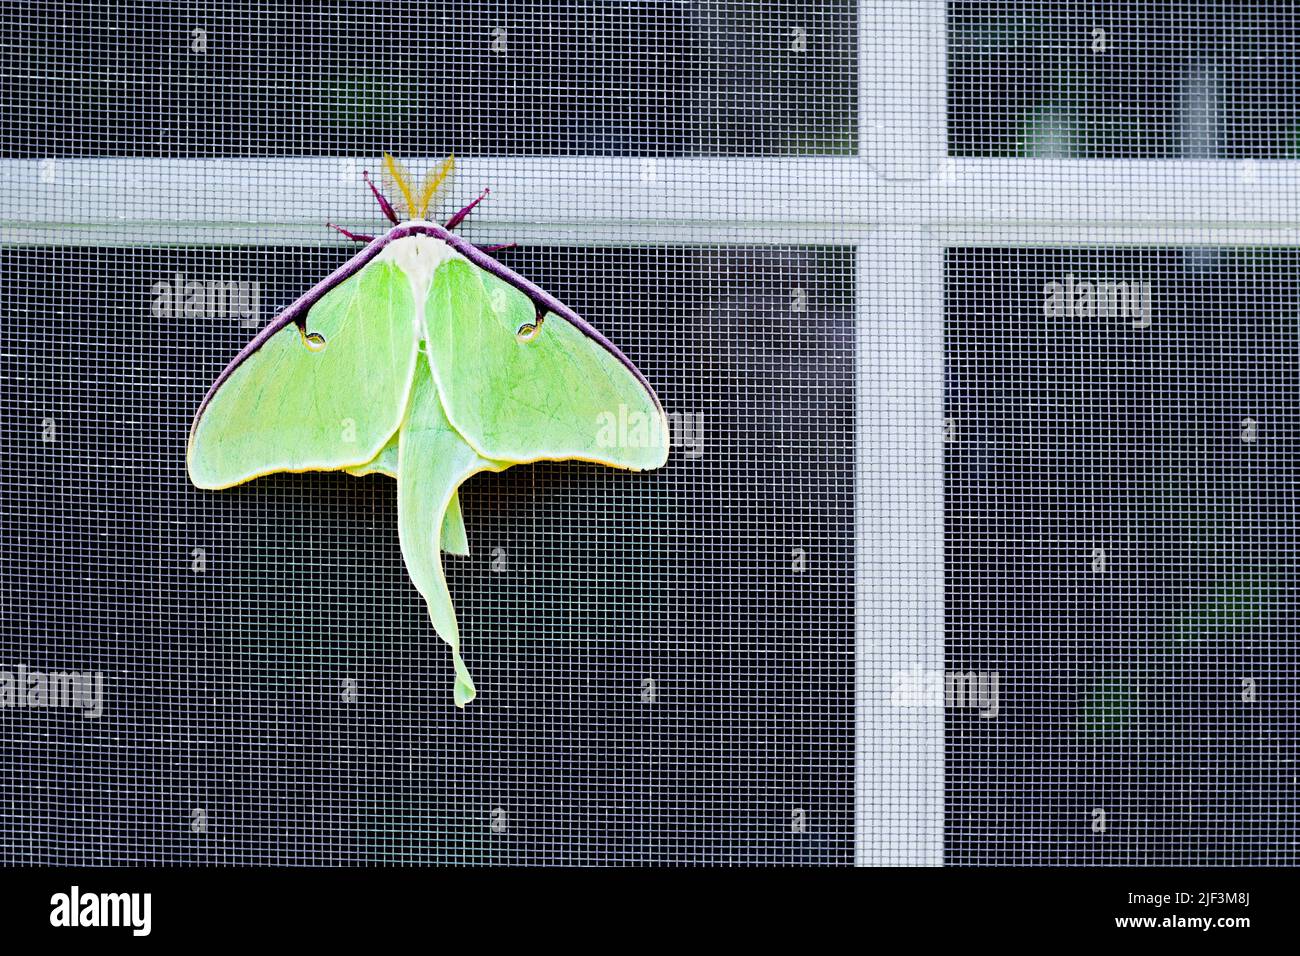 Nocturnal luna moth on window Stock Photo